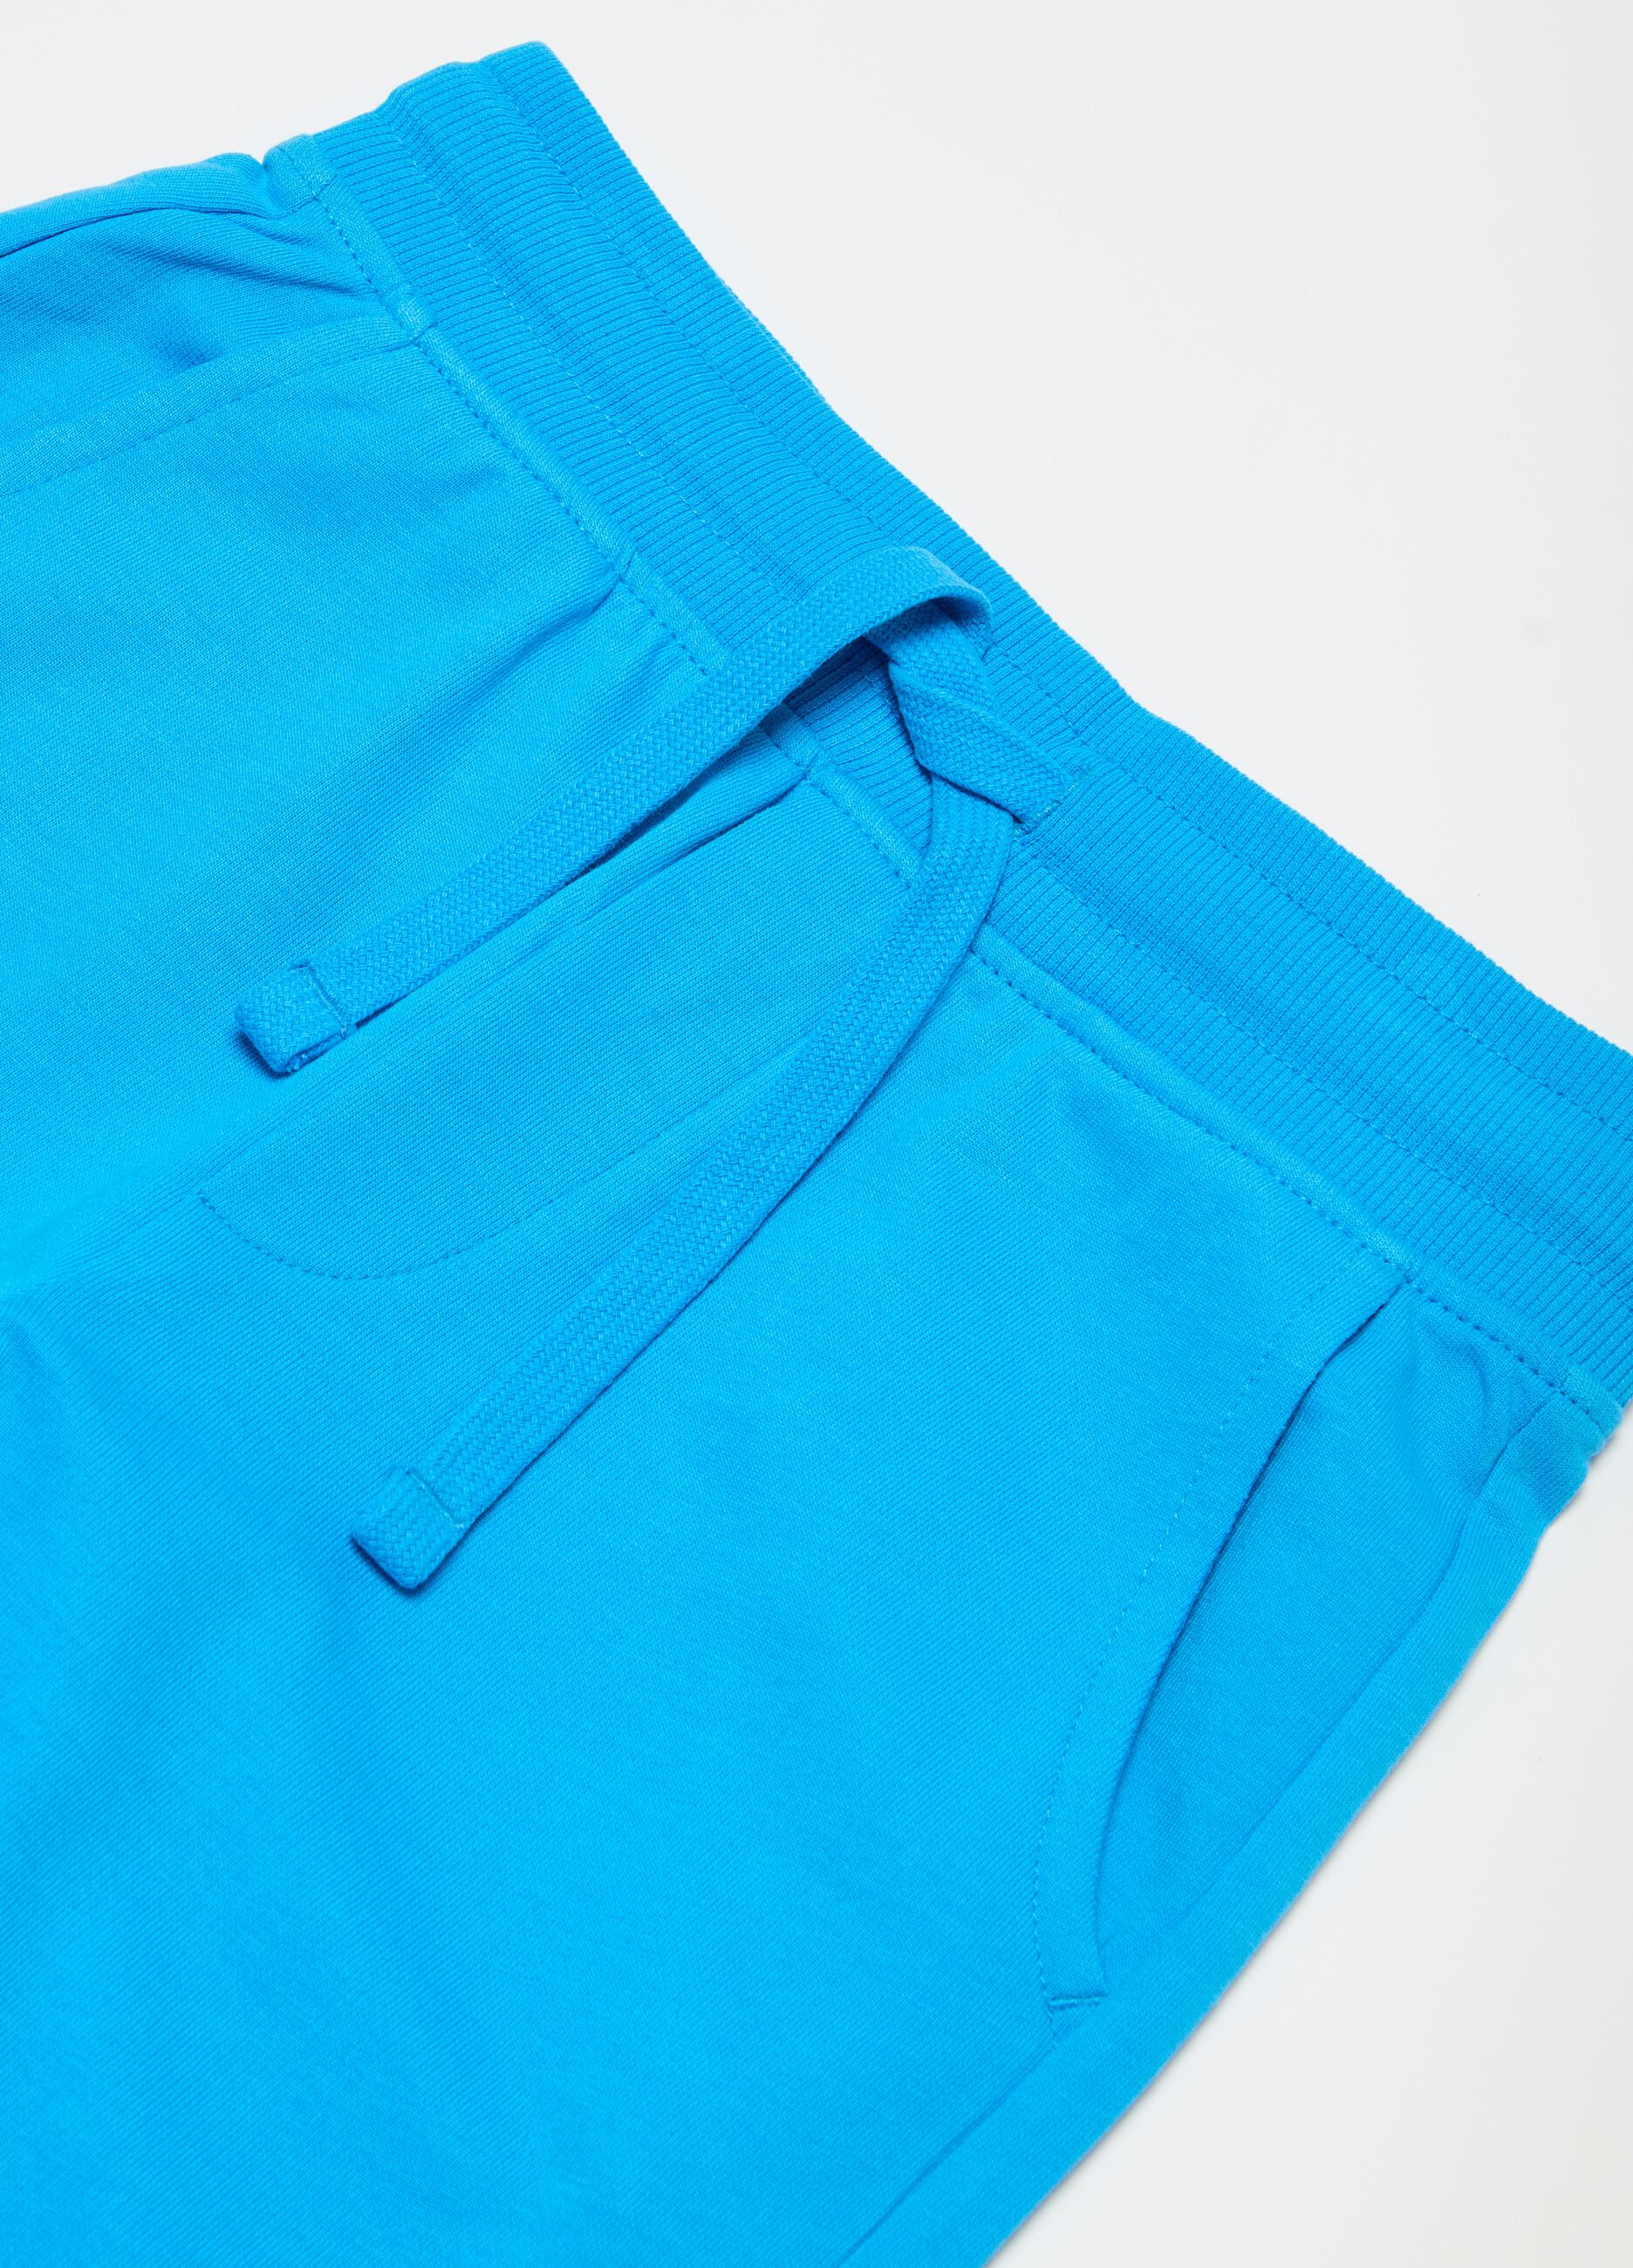 Fleece Bermuda shorts with drawstring